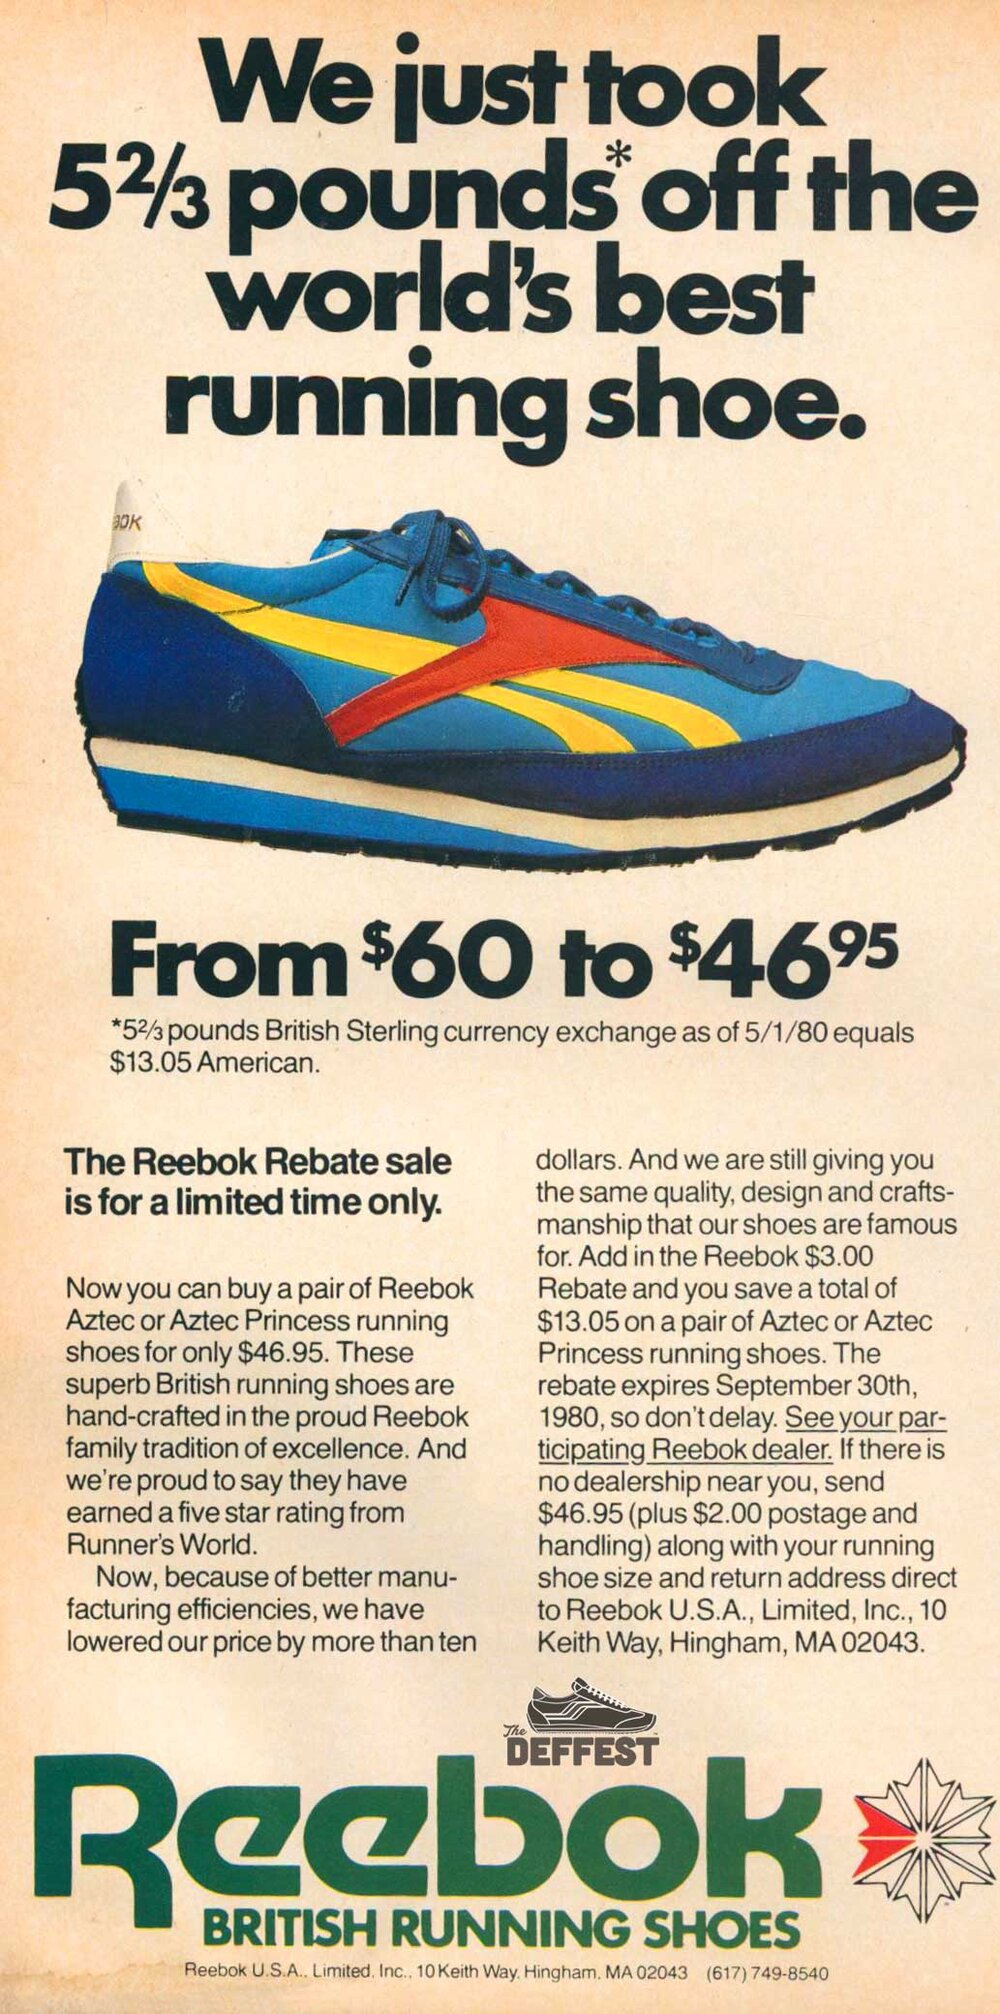 The Deffest®. A vintage and retro sneaker — Reebok Aztec 1980 vintage shoes ad